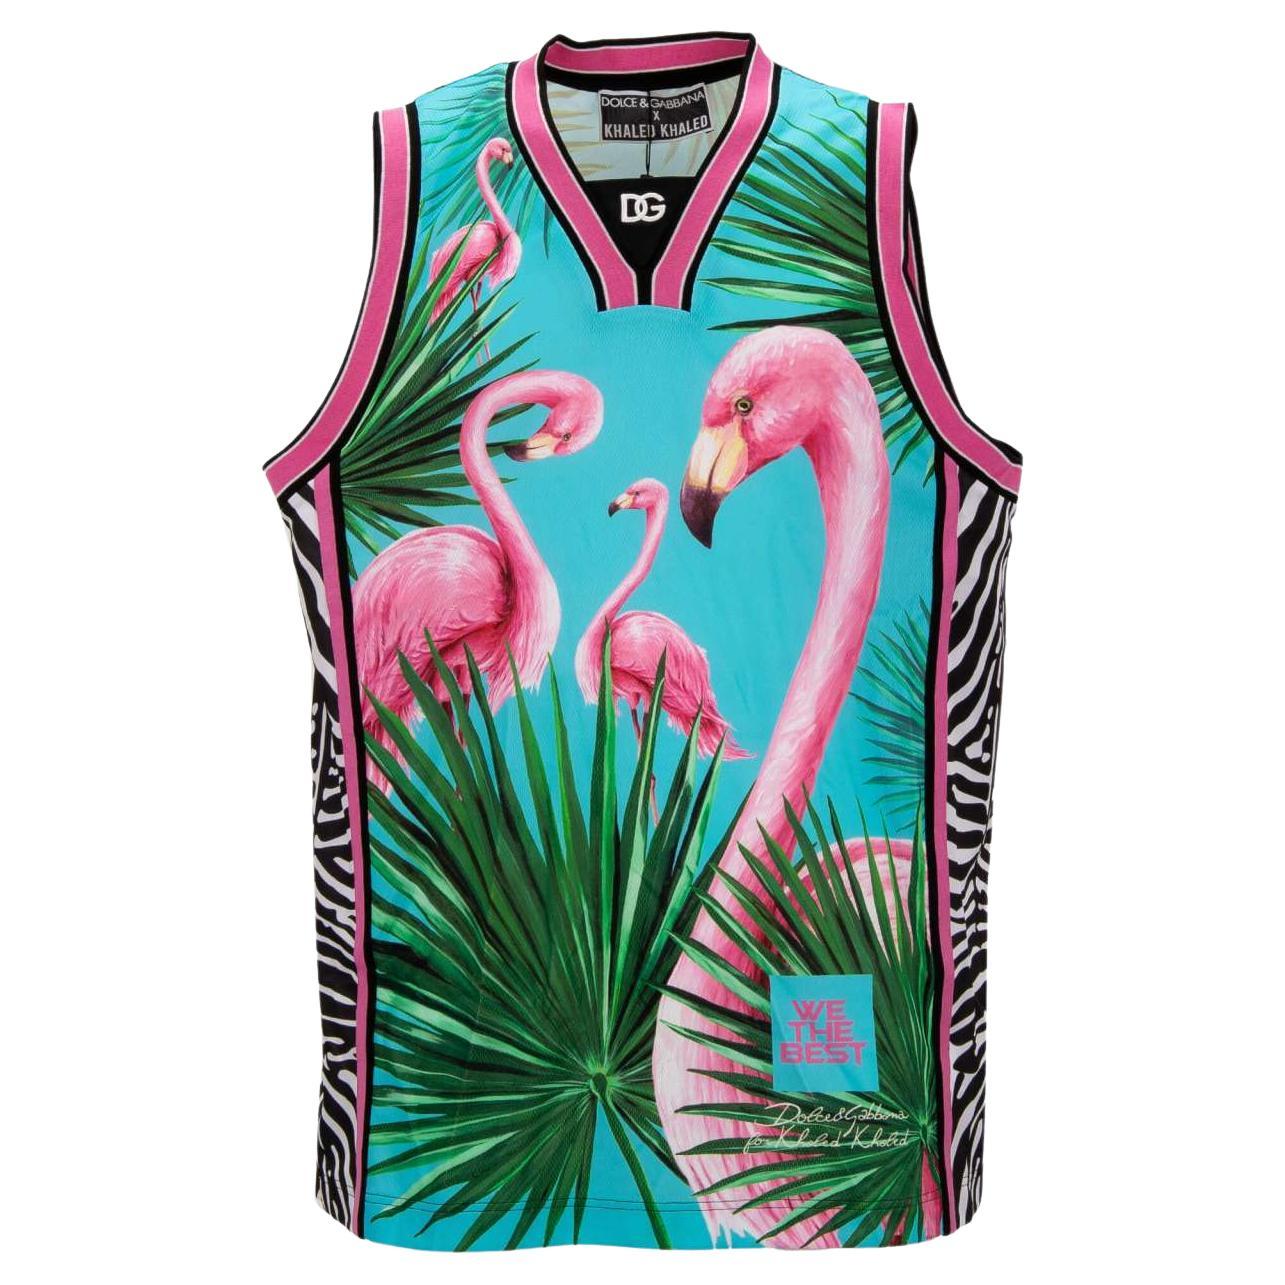 D&G - DJ Khaled Oversize Rank Top with Flamingo Zebra Print Pink Blue 52 For Sale